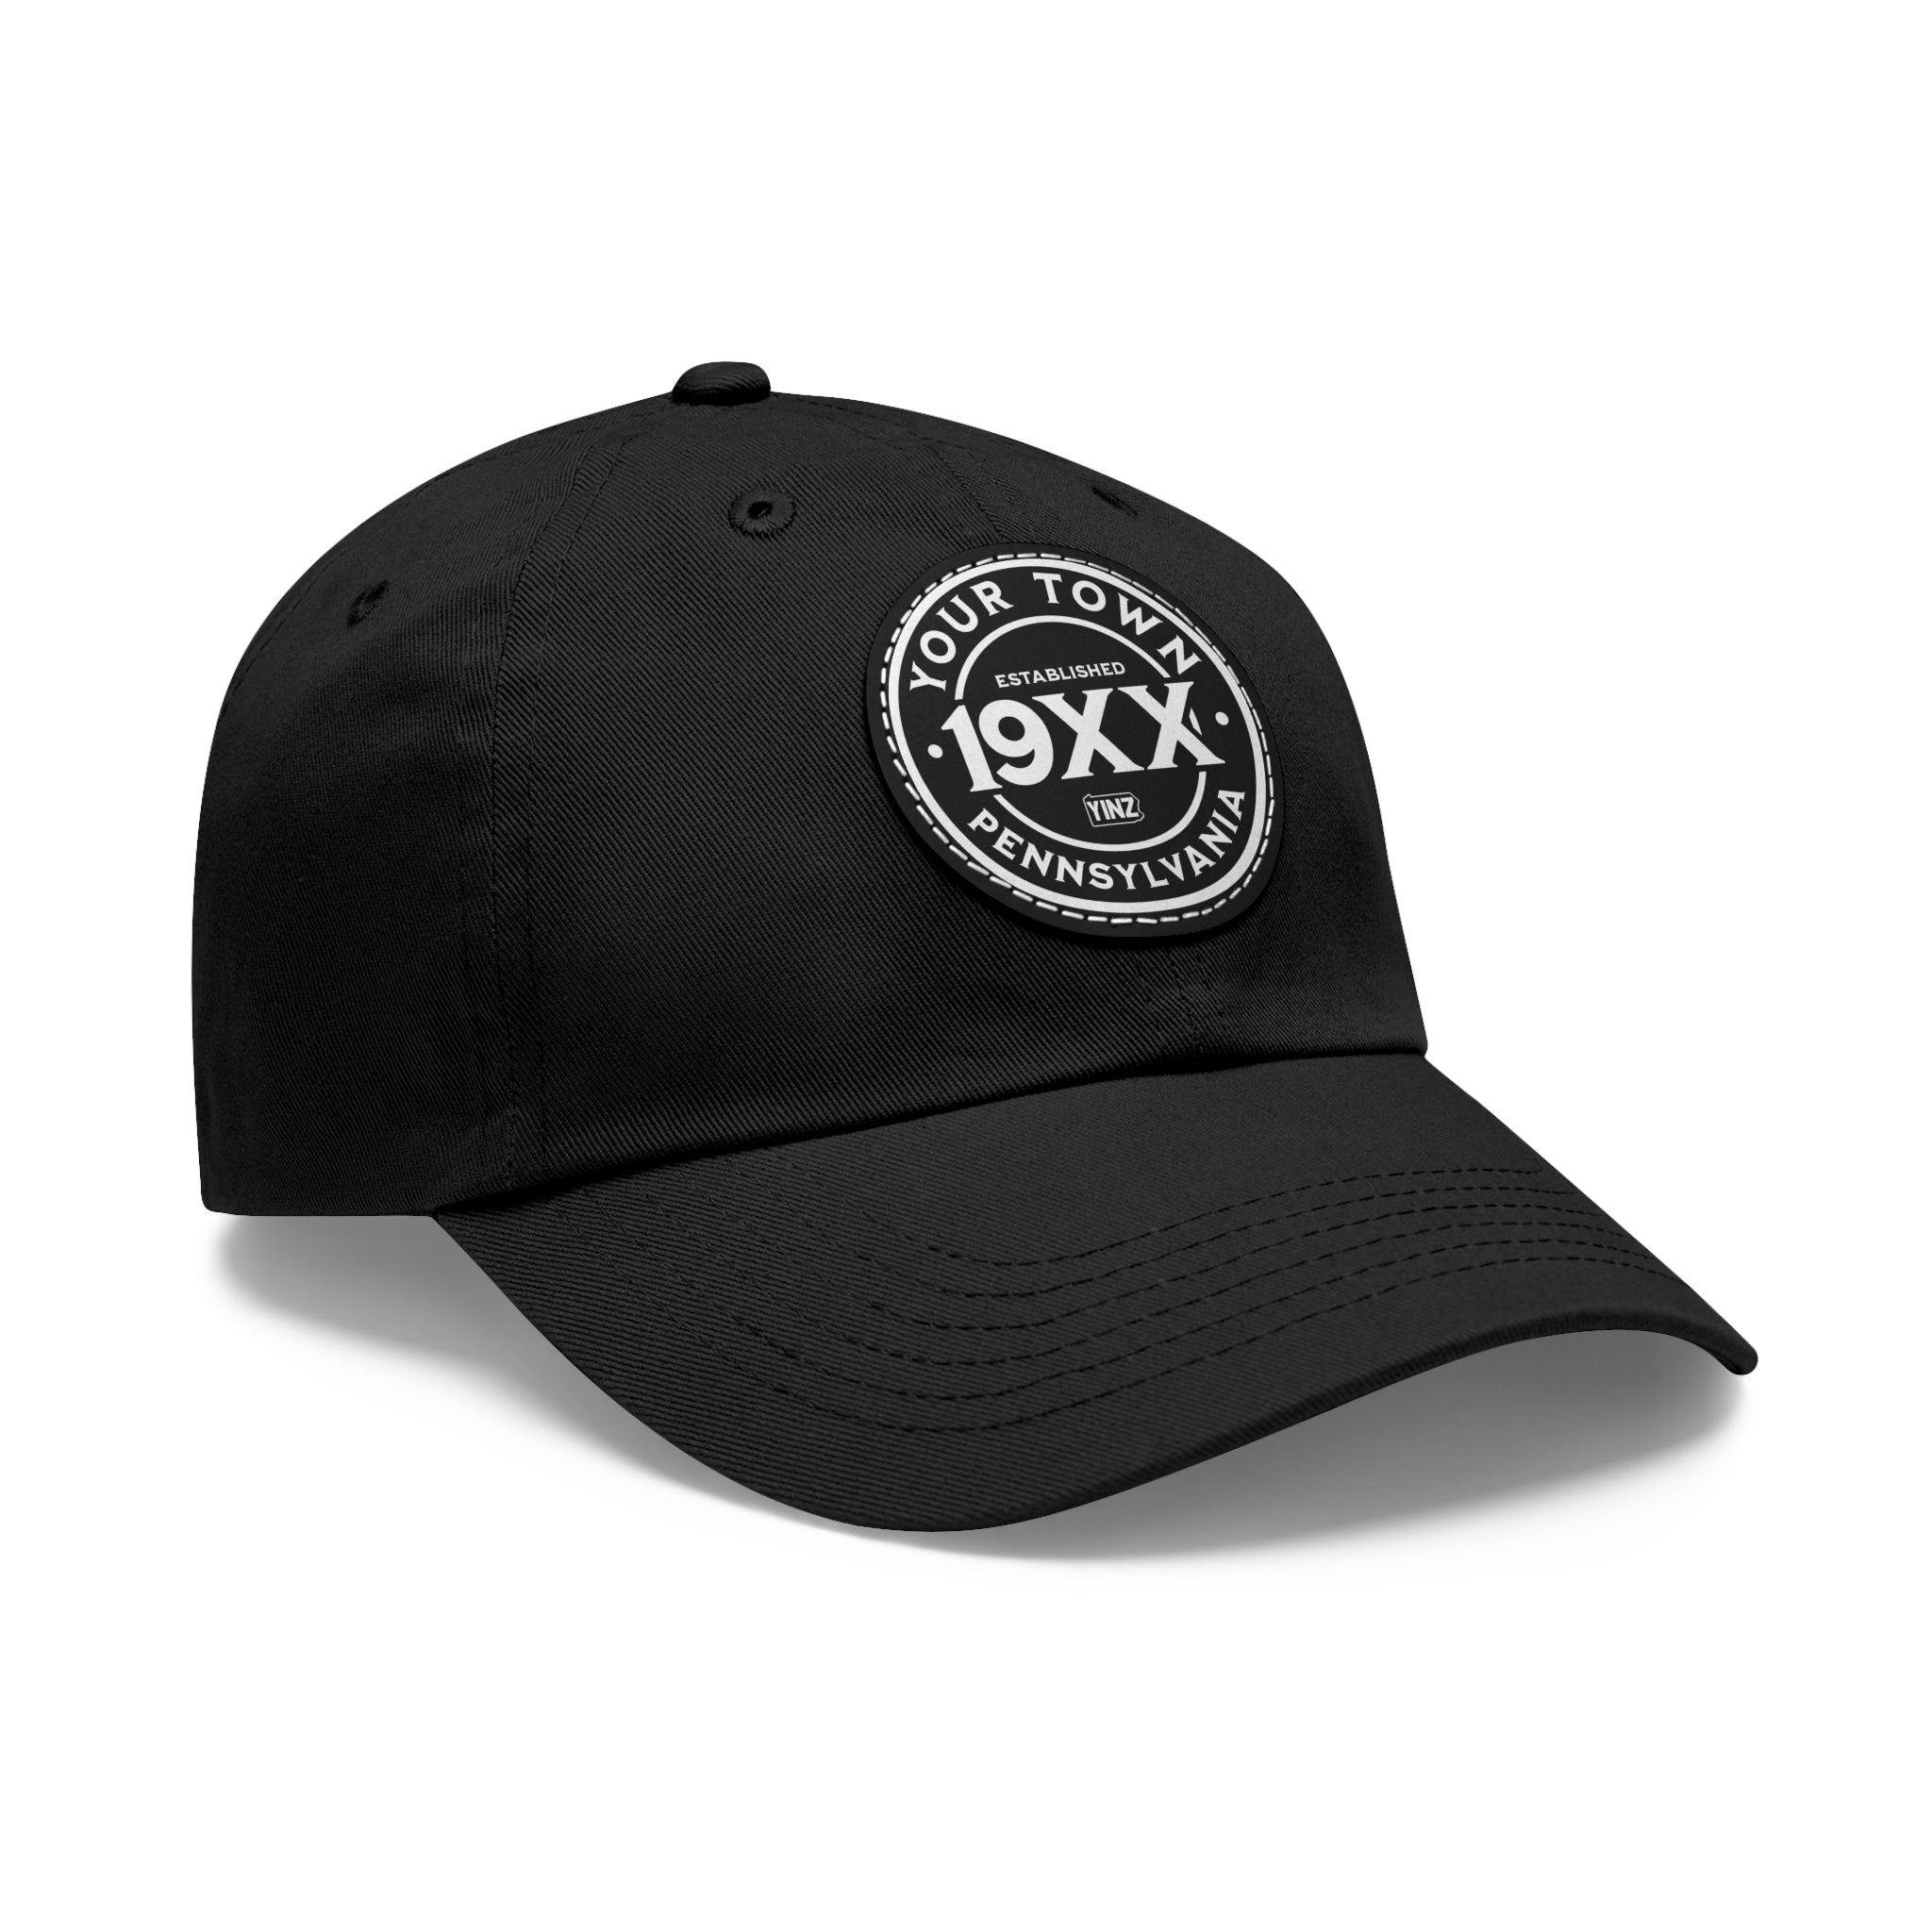 Custom "Your Town" Founders Patch Hat - Yinzylvania